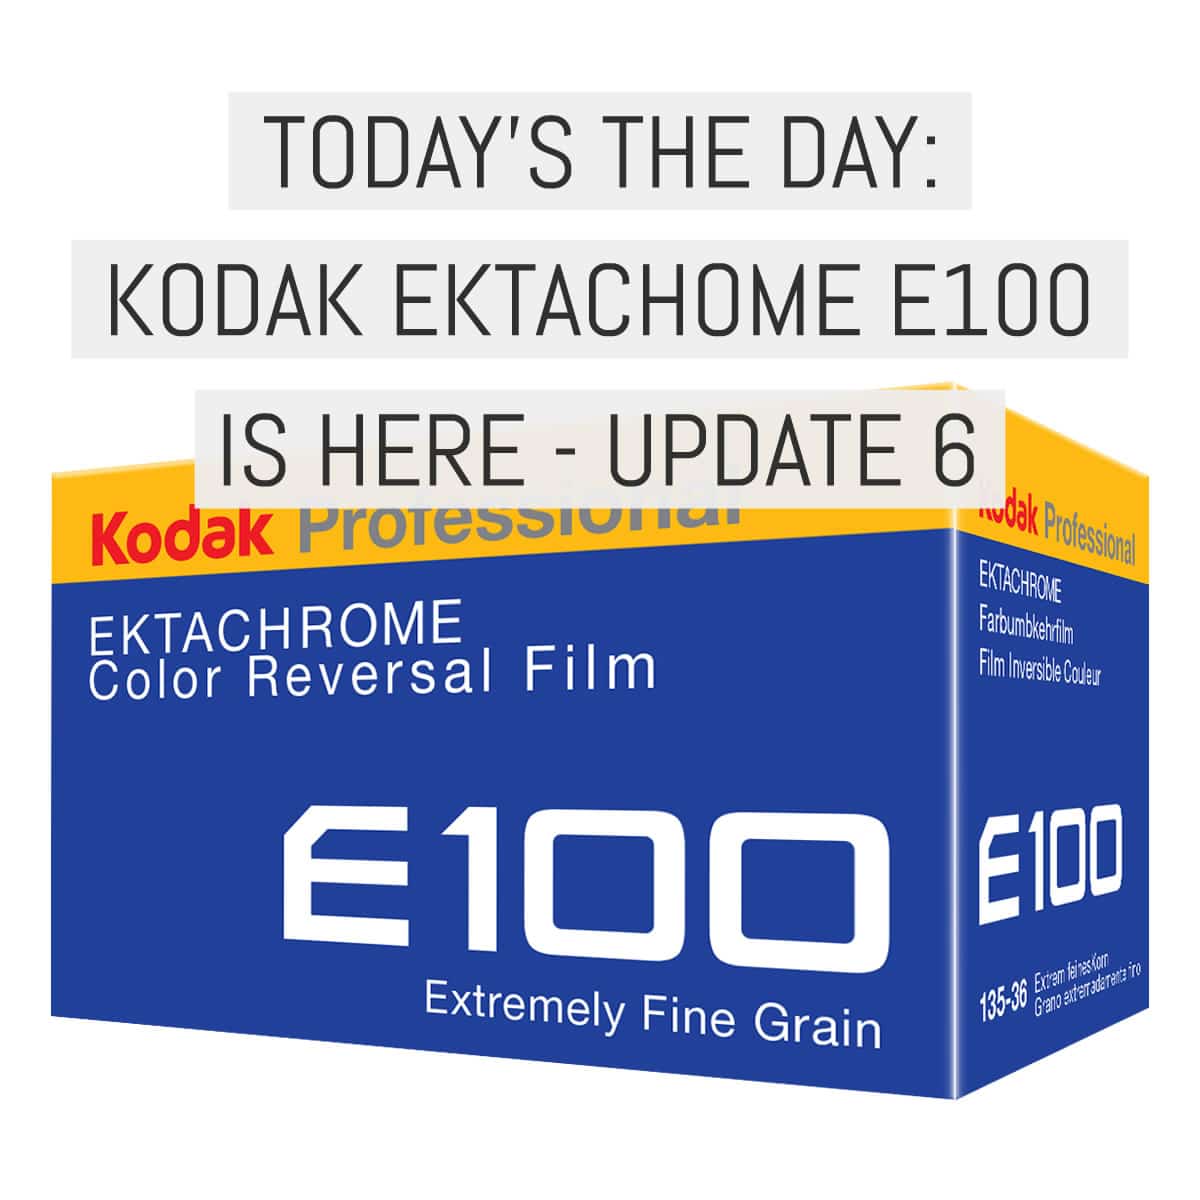 Today’s the day: Kodak EKTACHROME E100 release – UPDATE 6